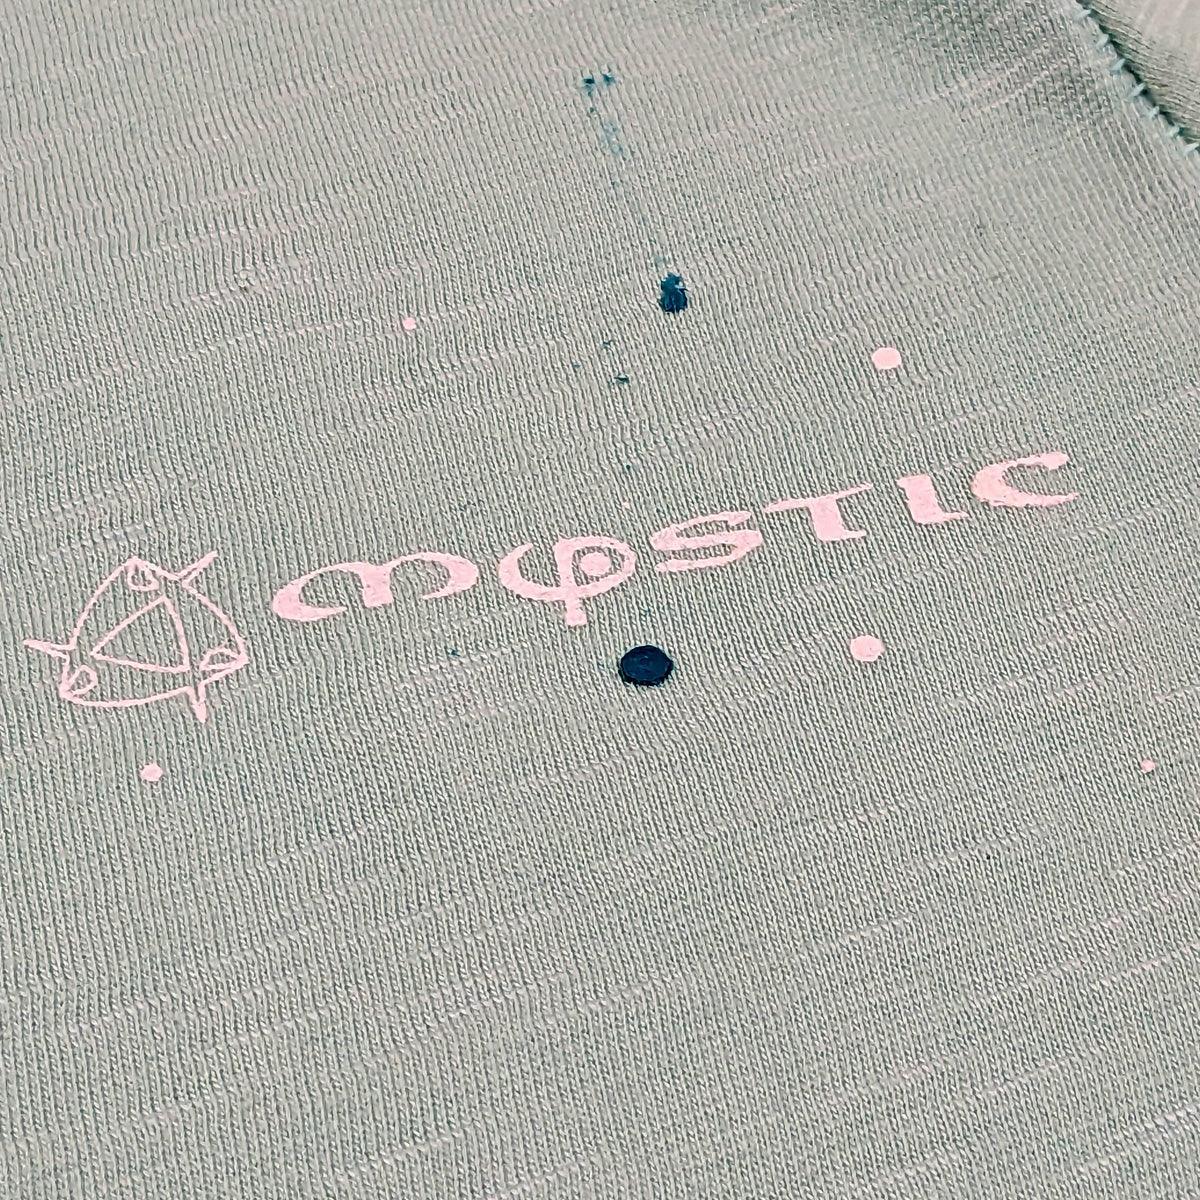 Mystic Entity Women's T-Shirt - Kitesurf